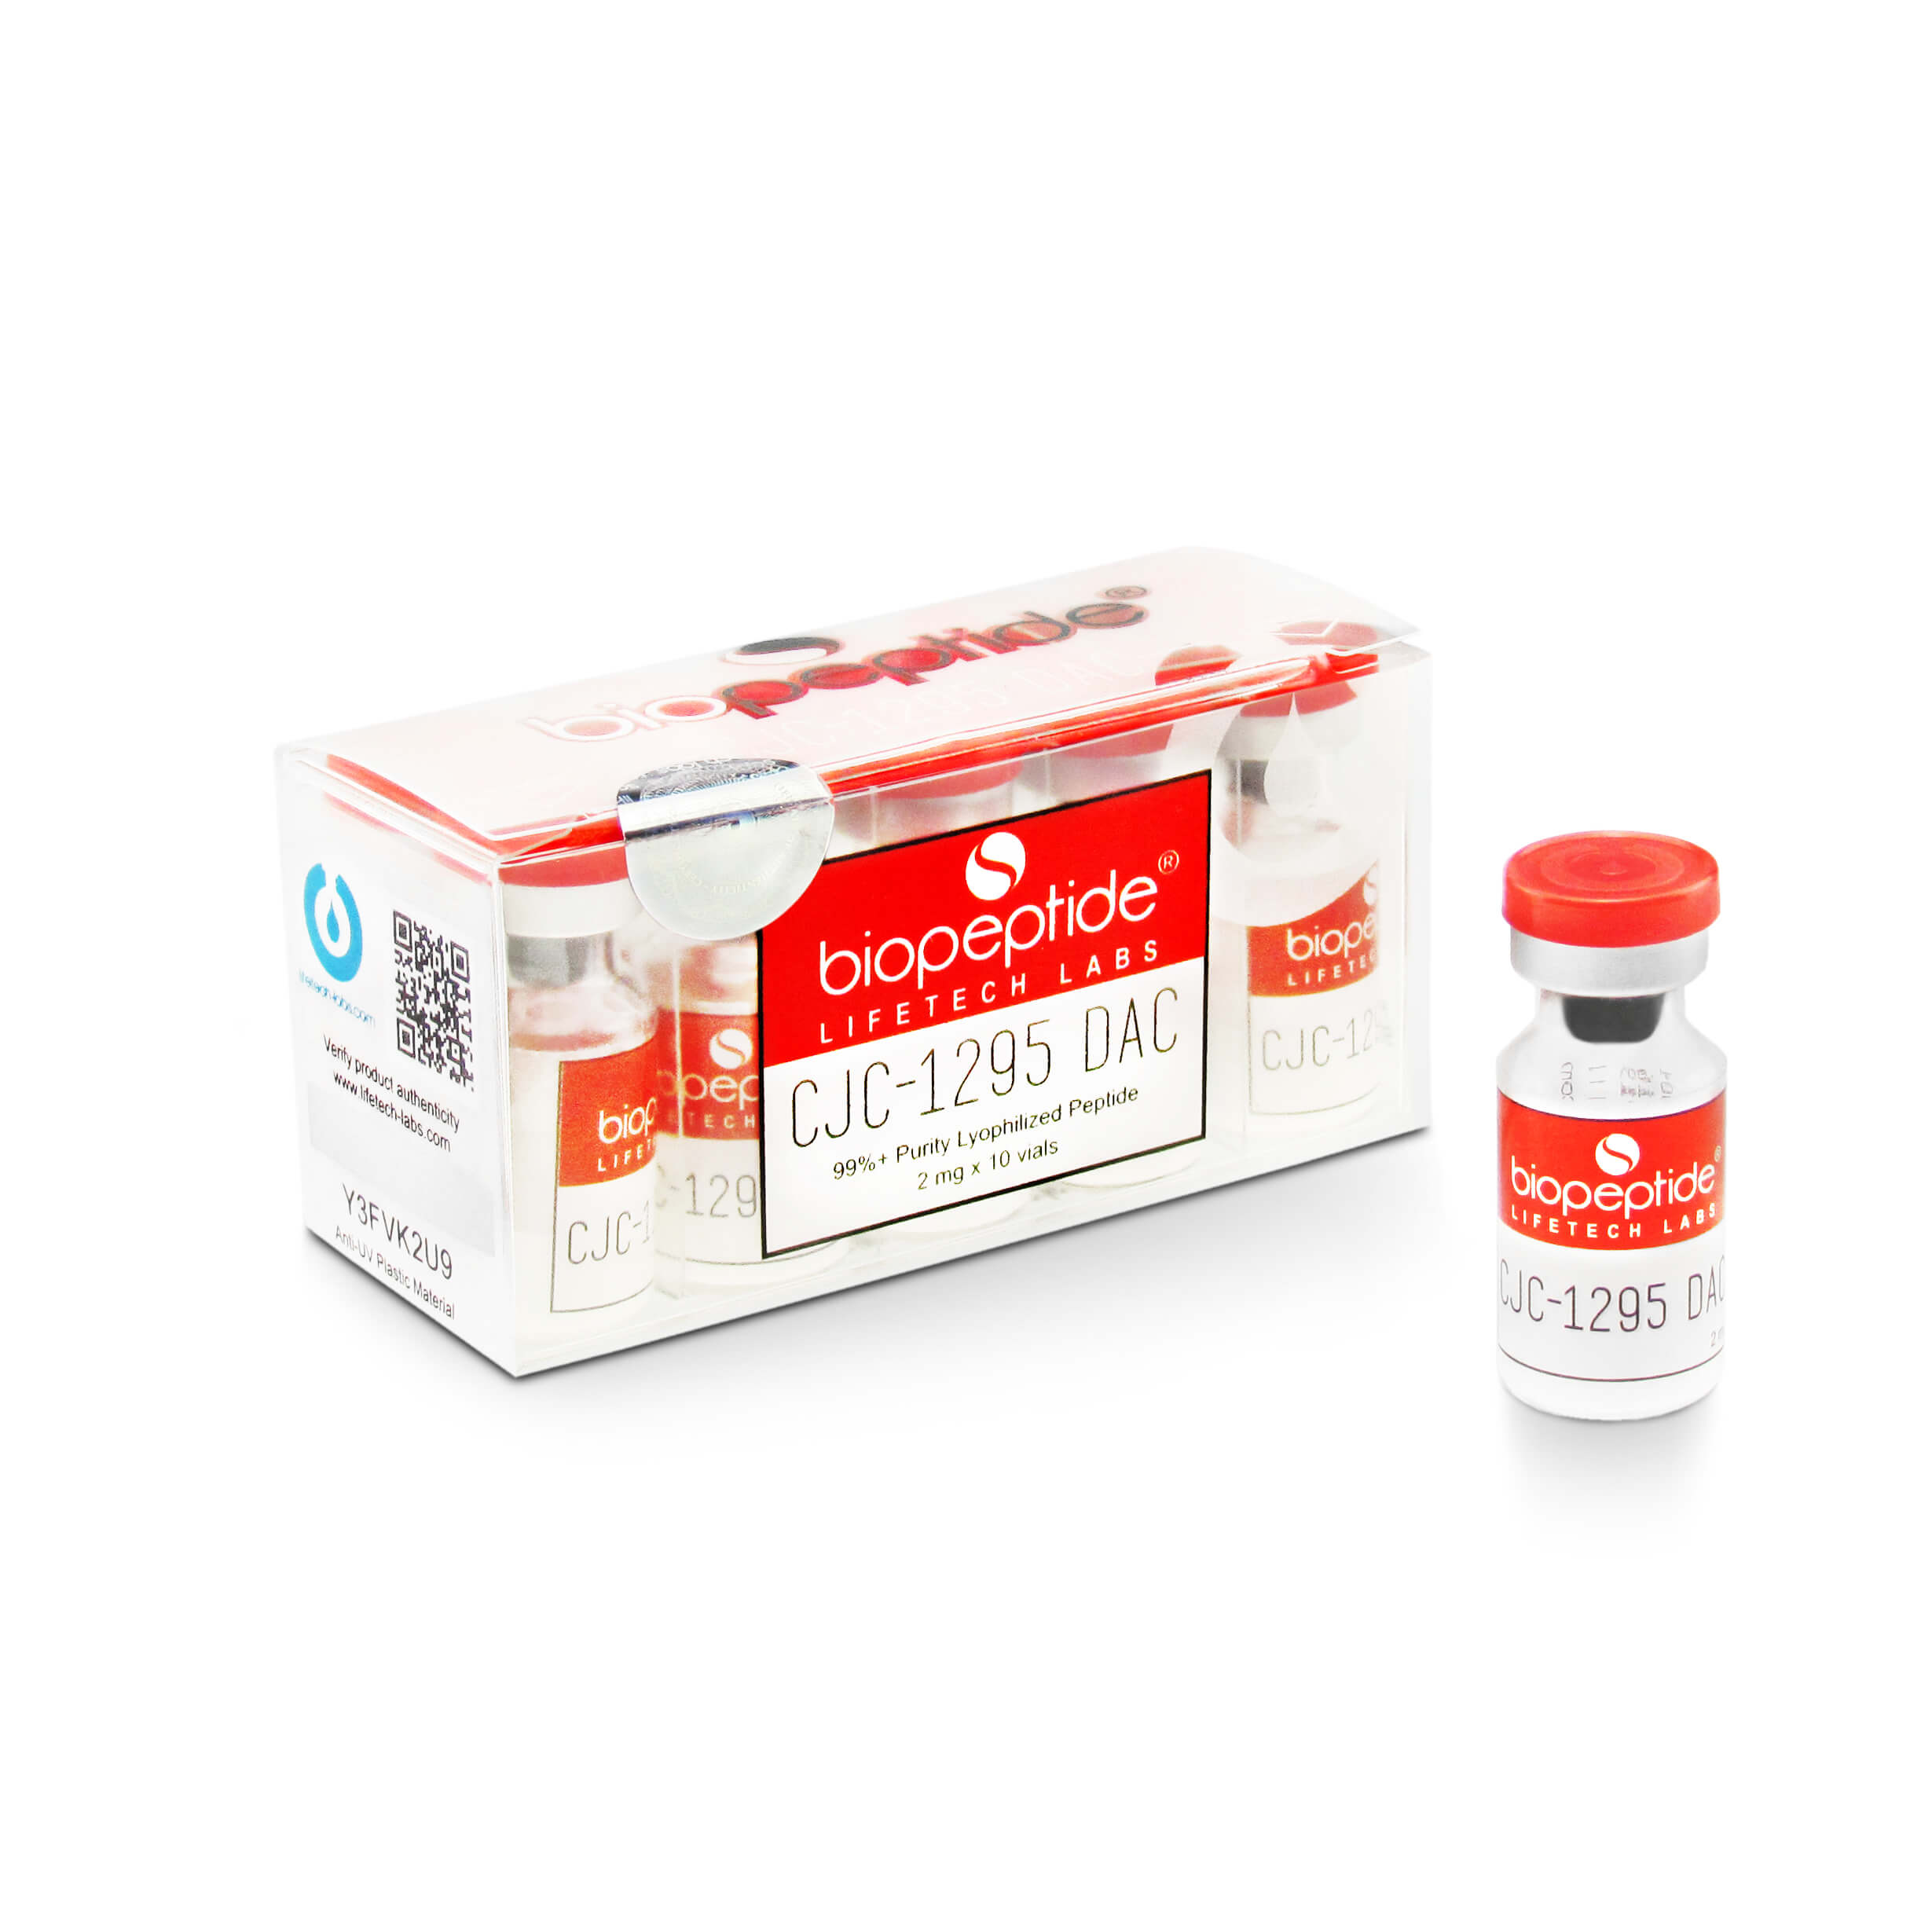 buy-peptide-cjc-1295-dac-20mg-10-vials-lifetech-labs